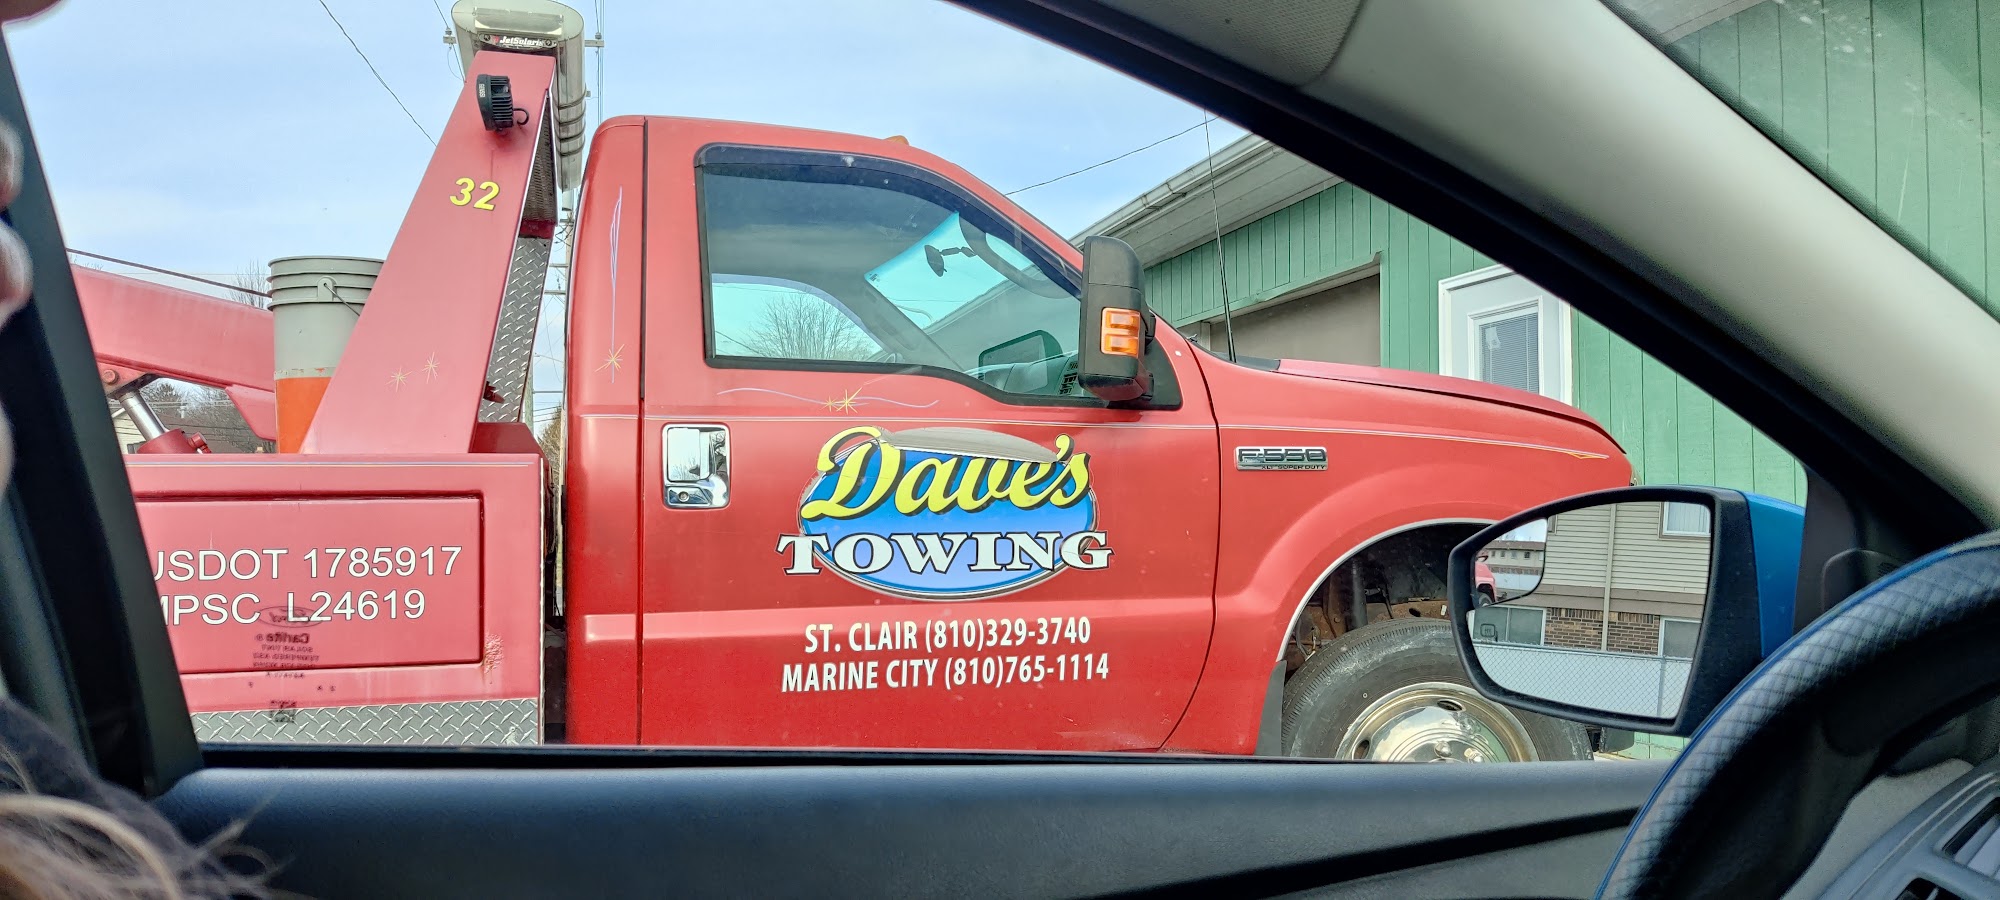 Dave's Towing 555 West Blvd, Marine City Michigan 48039